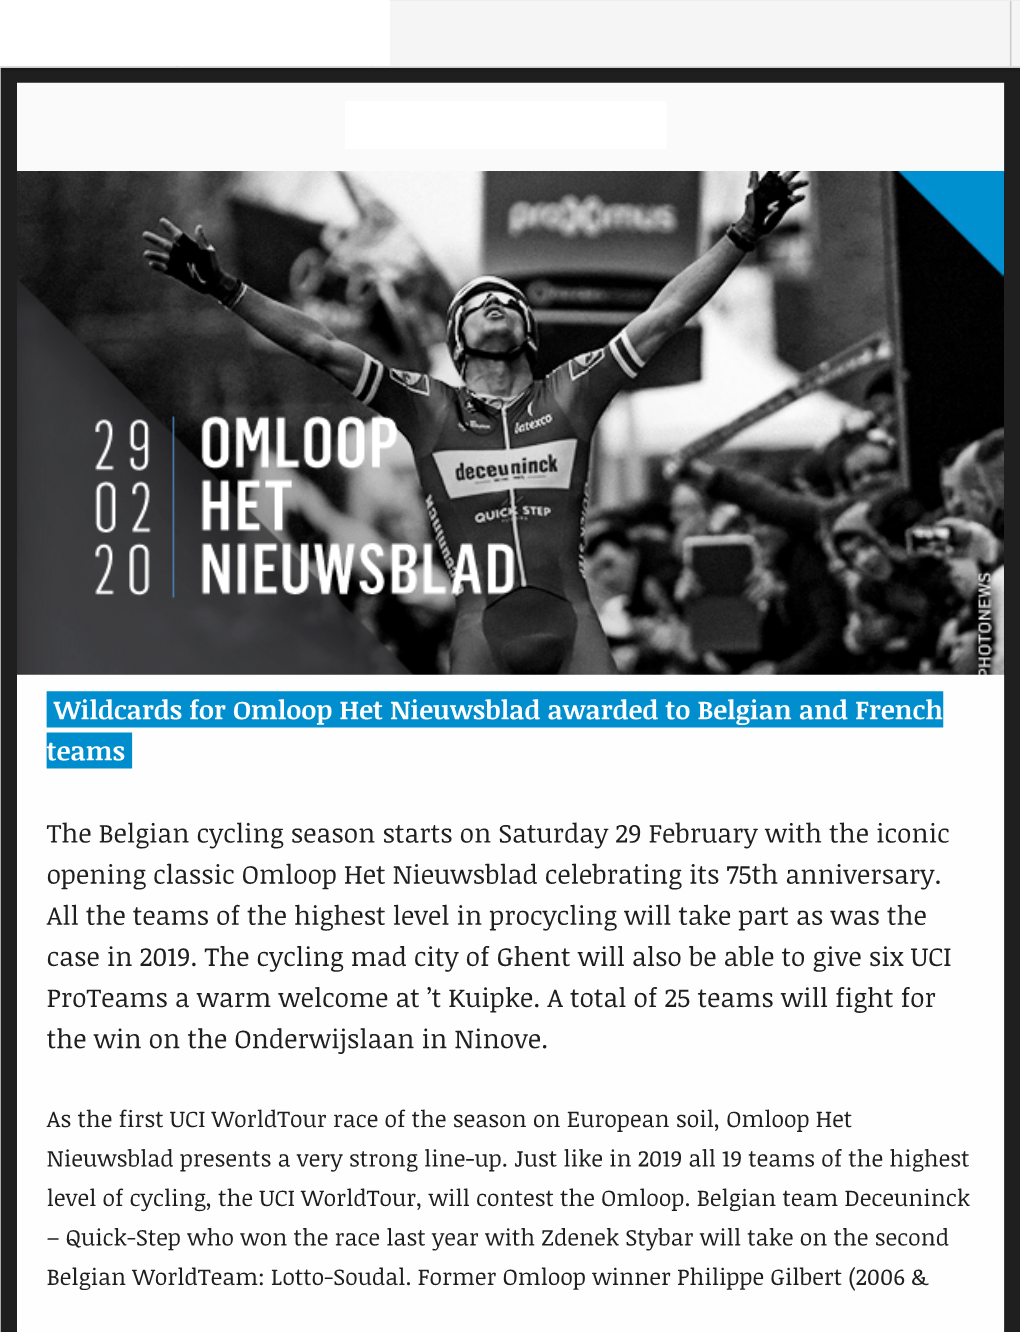 Wildcards for Omloop Het Nieuwsblad Awarded to Belgian and French Teams